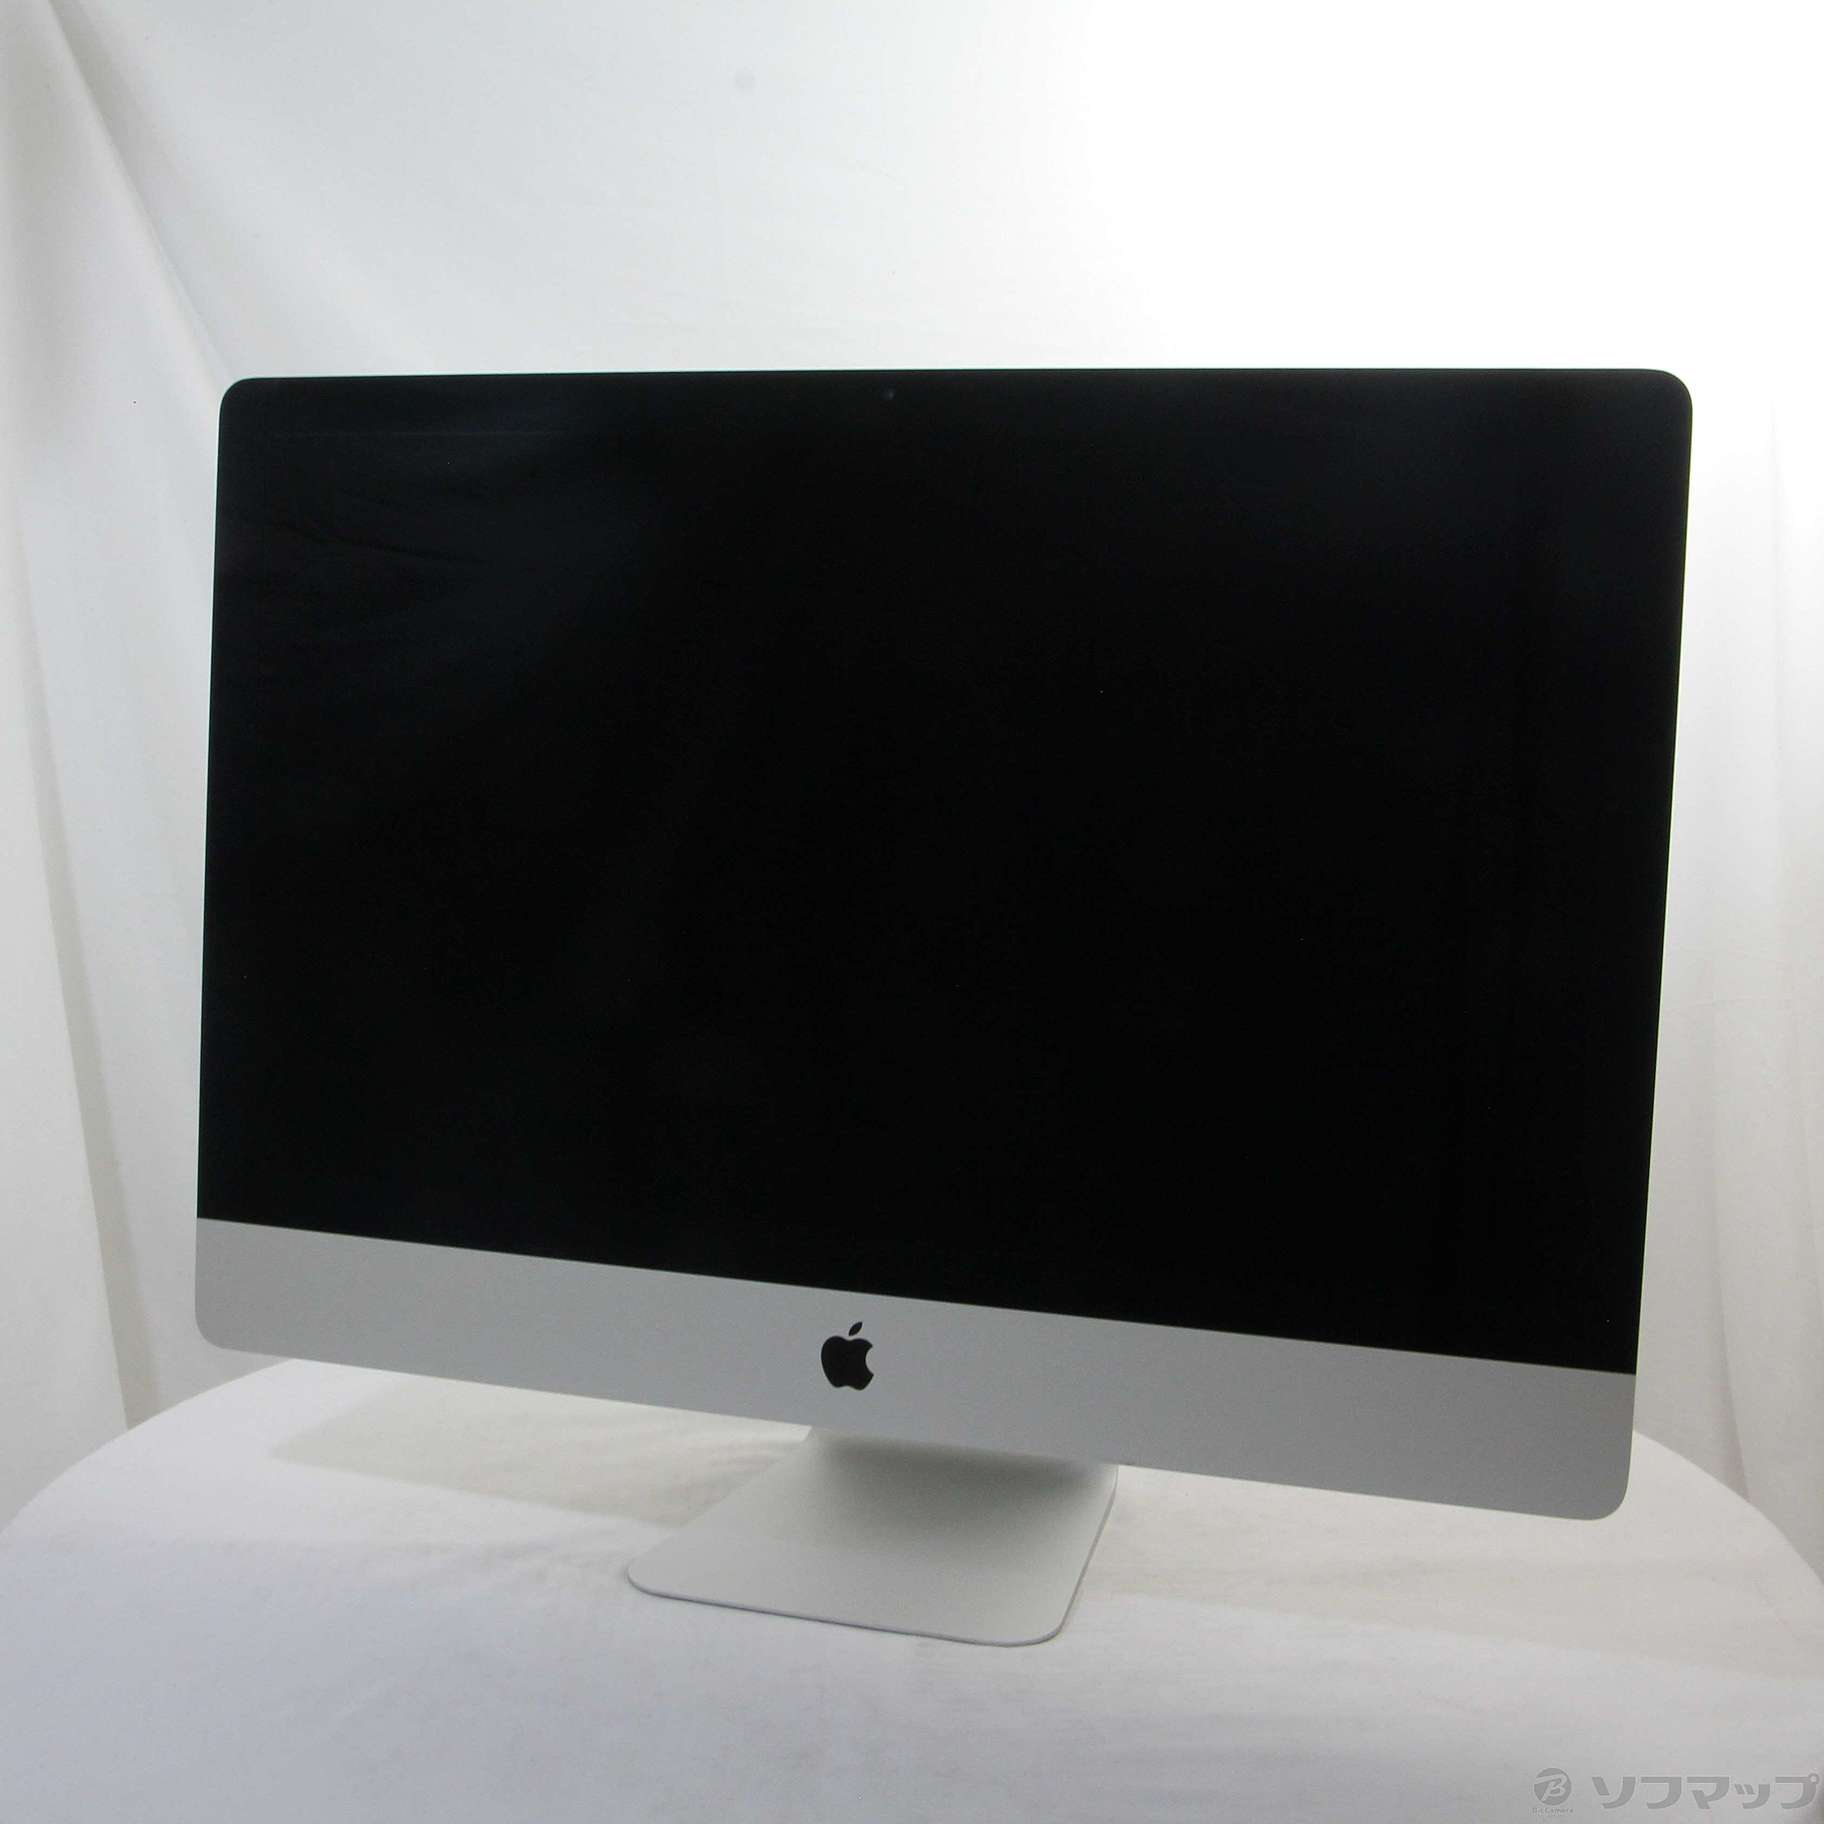 【直接受取】iMac 27-inch Late 2013